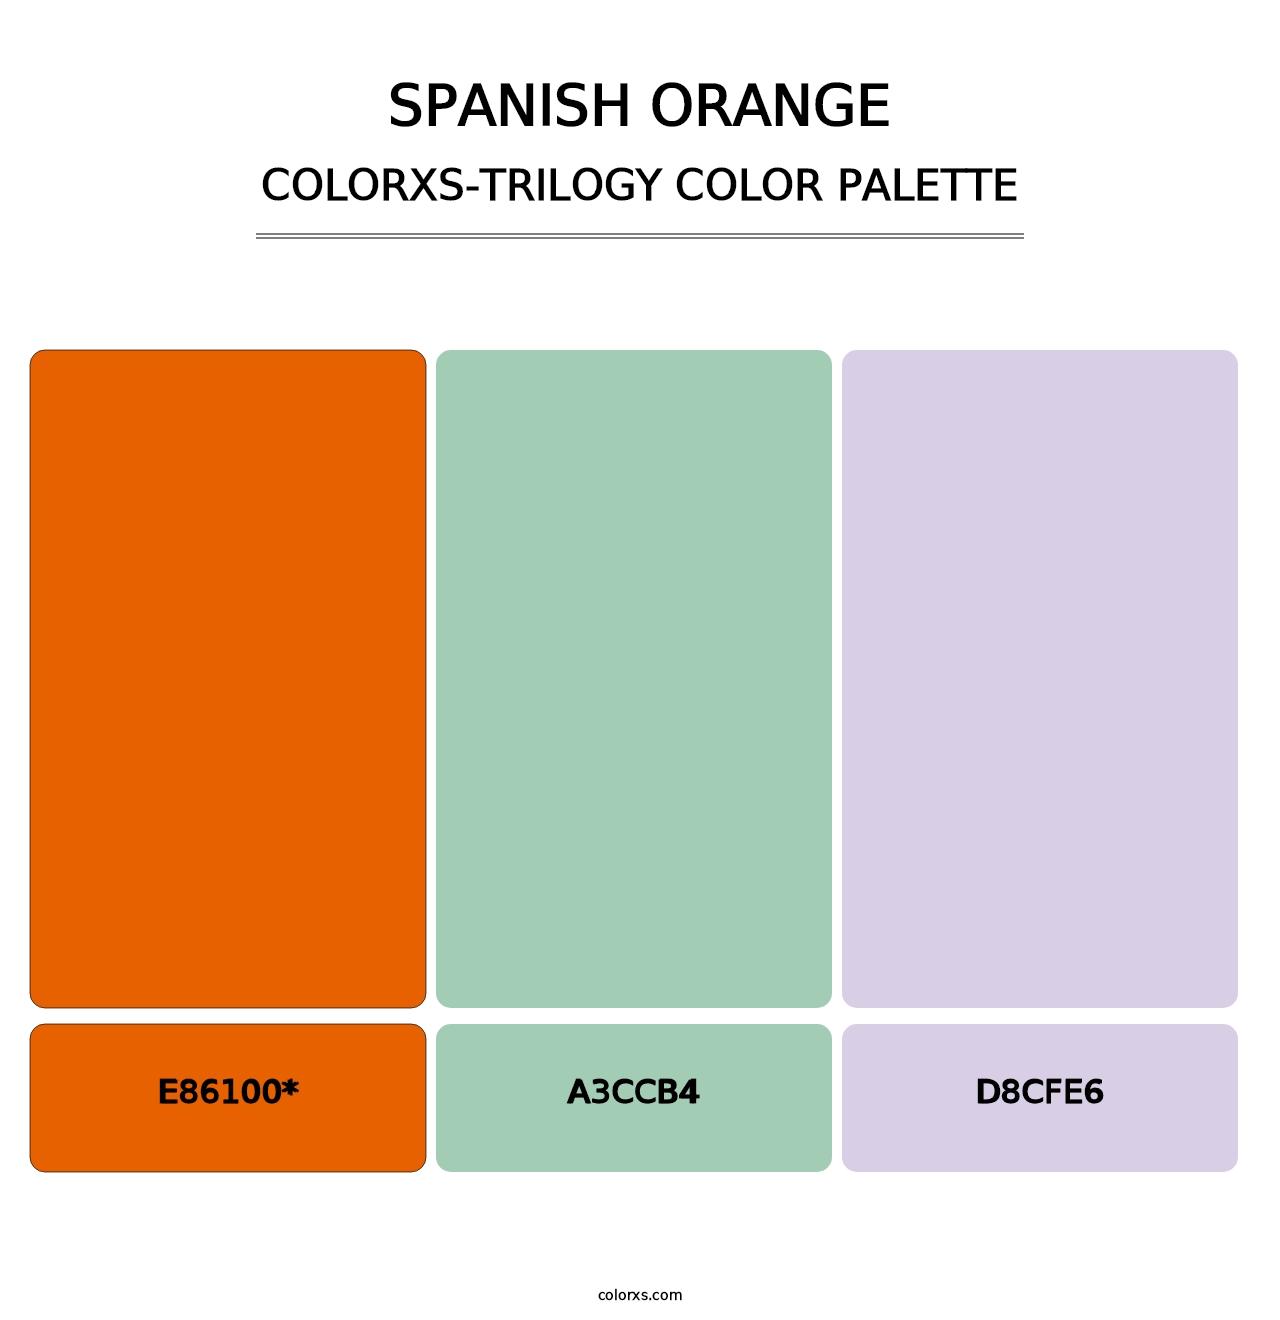 Spanish Orange - Colorxs Trilogy Palette